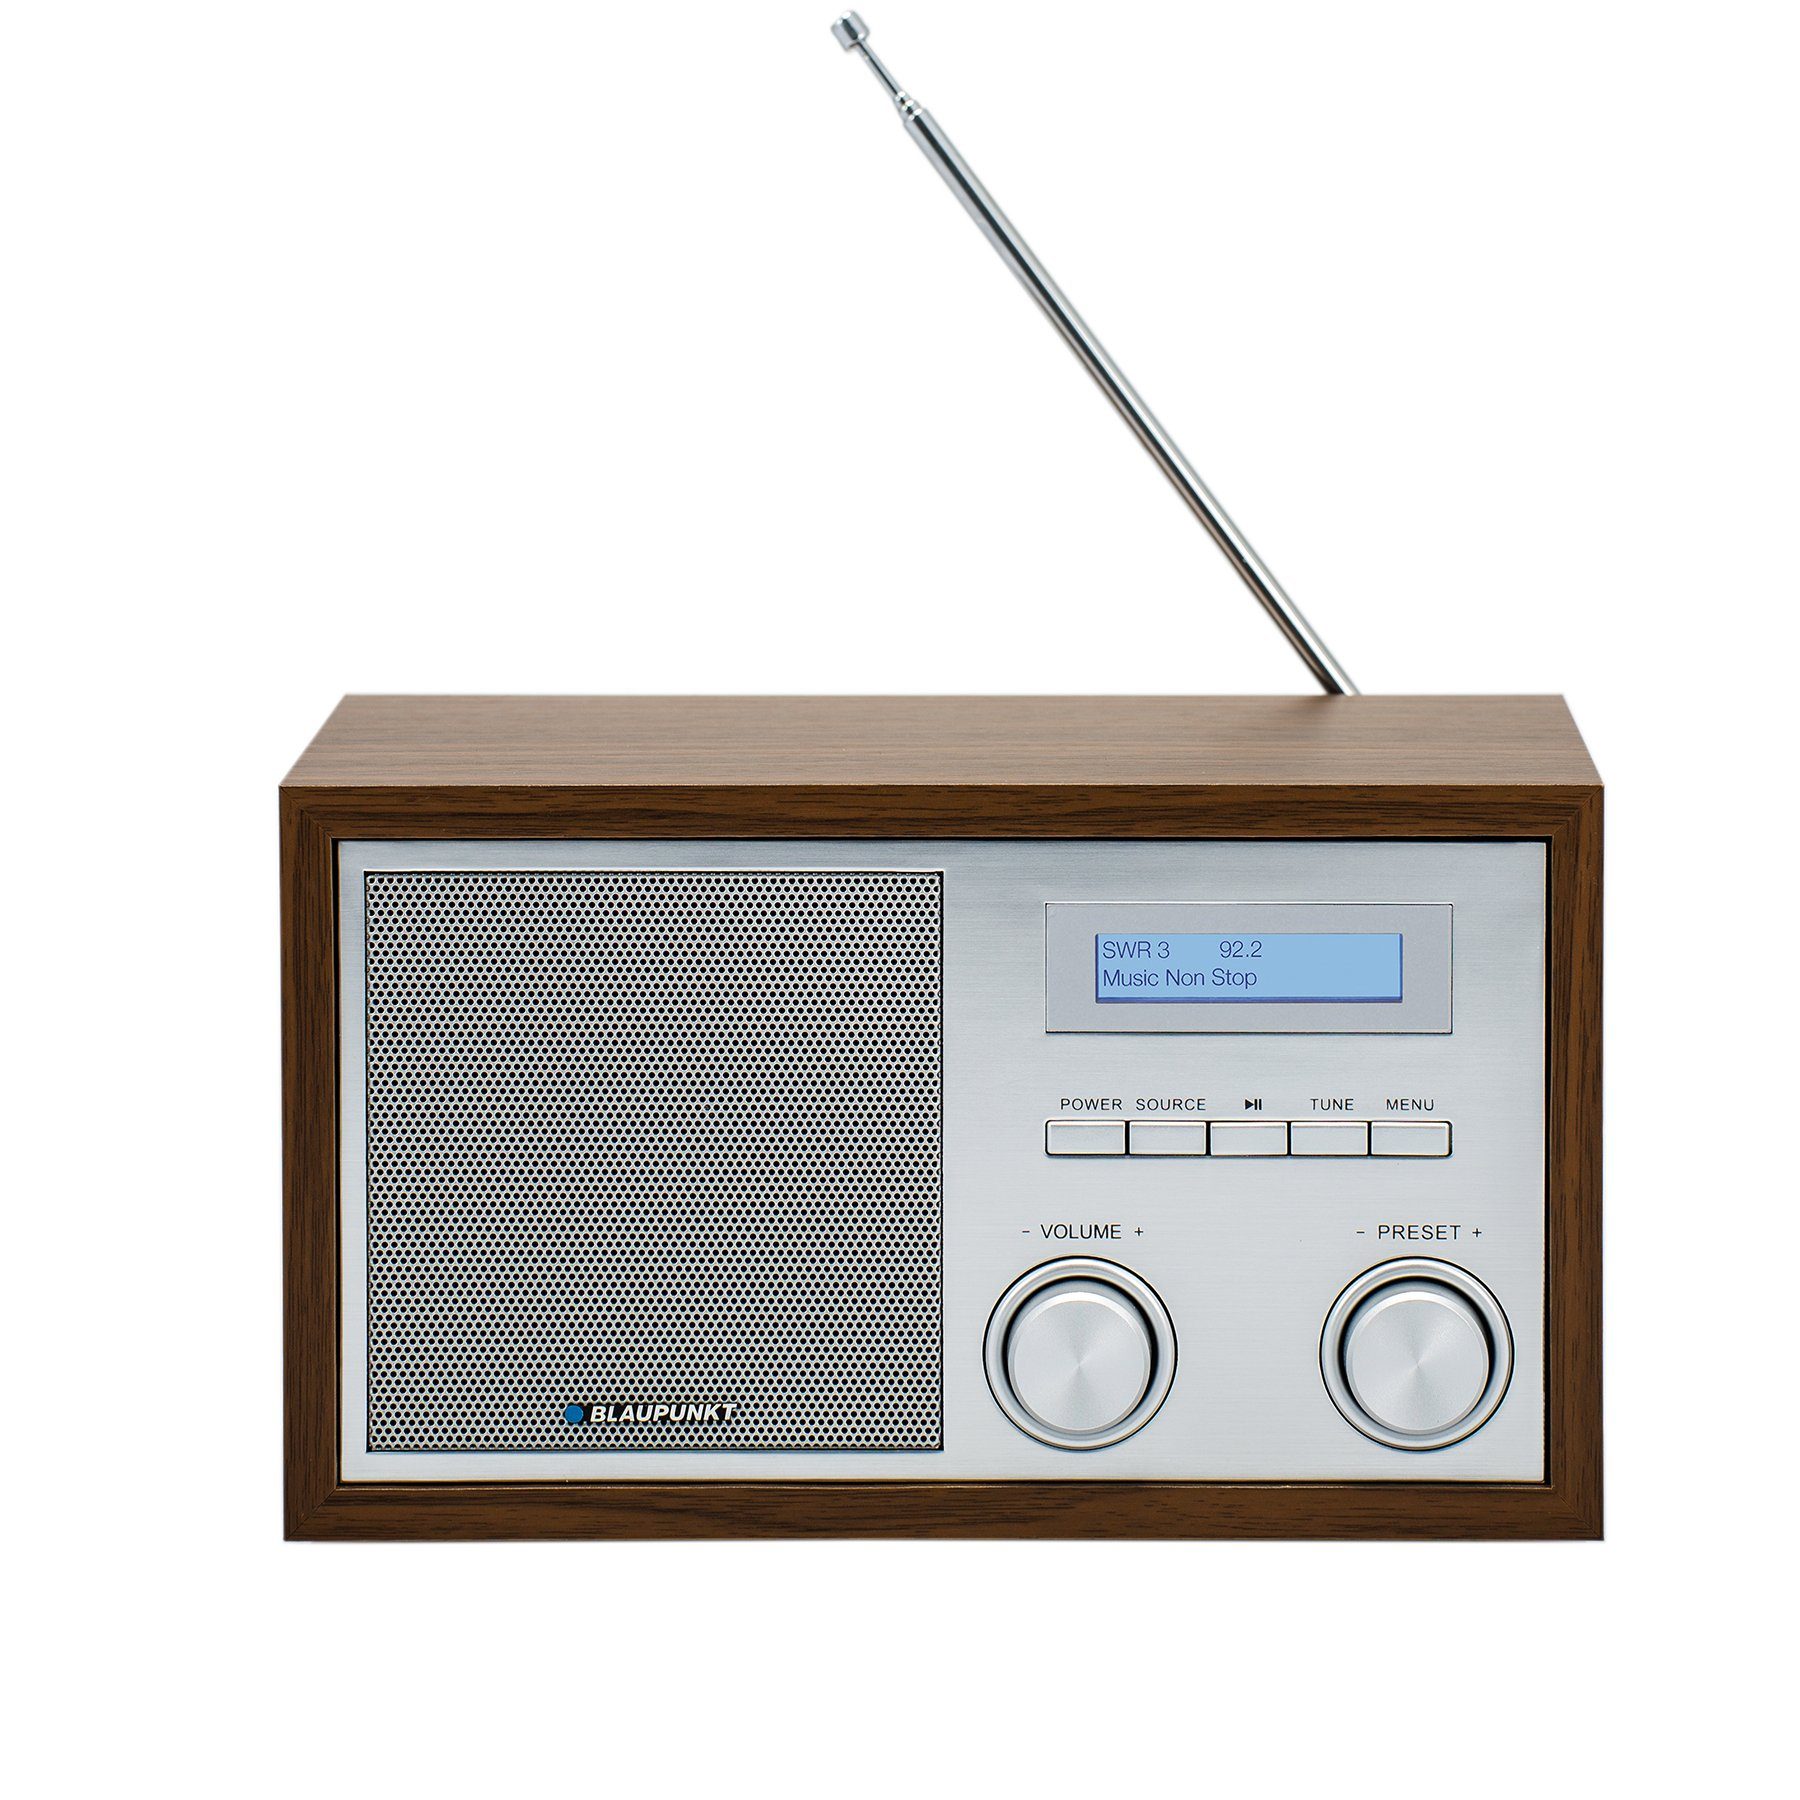 W) RXD Blaupunkt Radio Digitalradio (Digitalradio FM-Tuner, Nussbaum_neu 5,00 180 (DAB), (DAB) Nostalgie